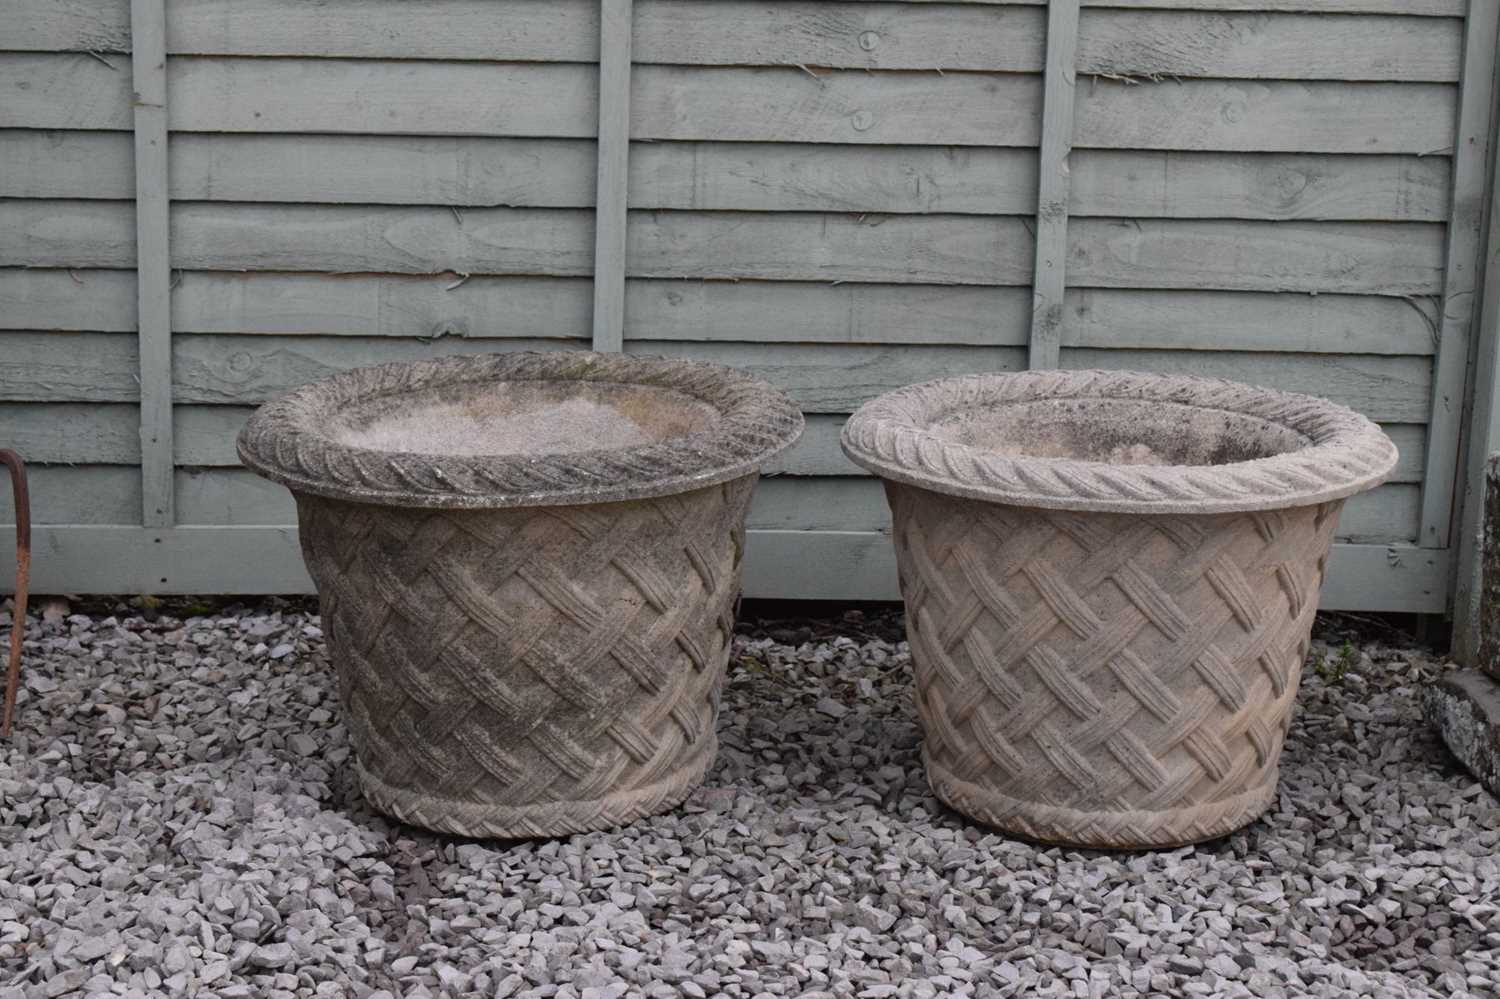 Pair of basket design garden urns - Image 12 of 12